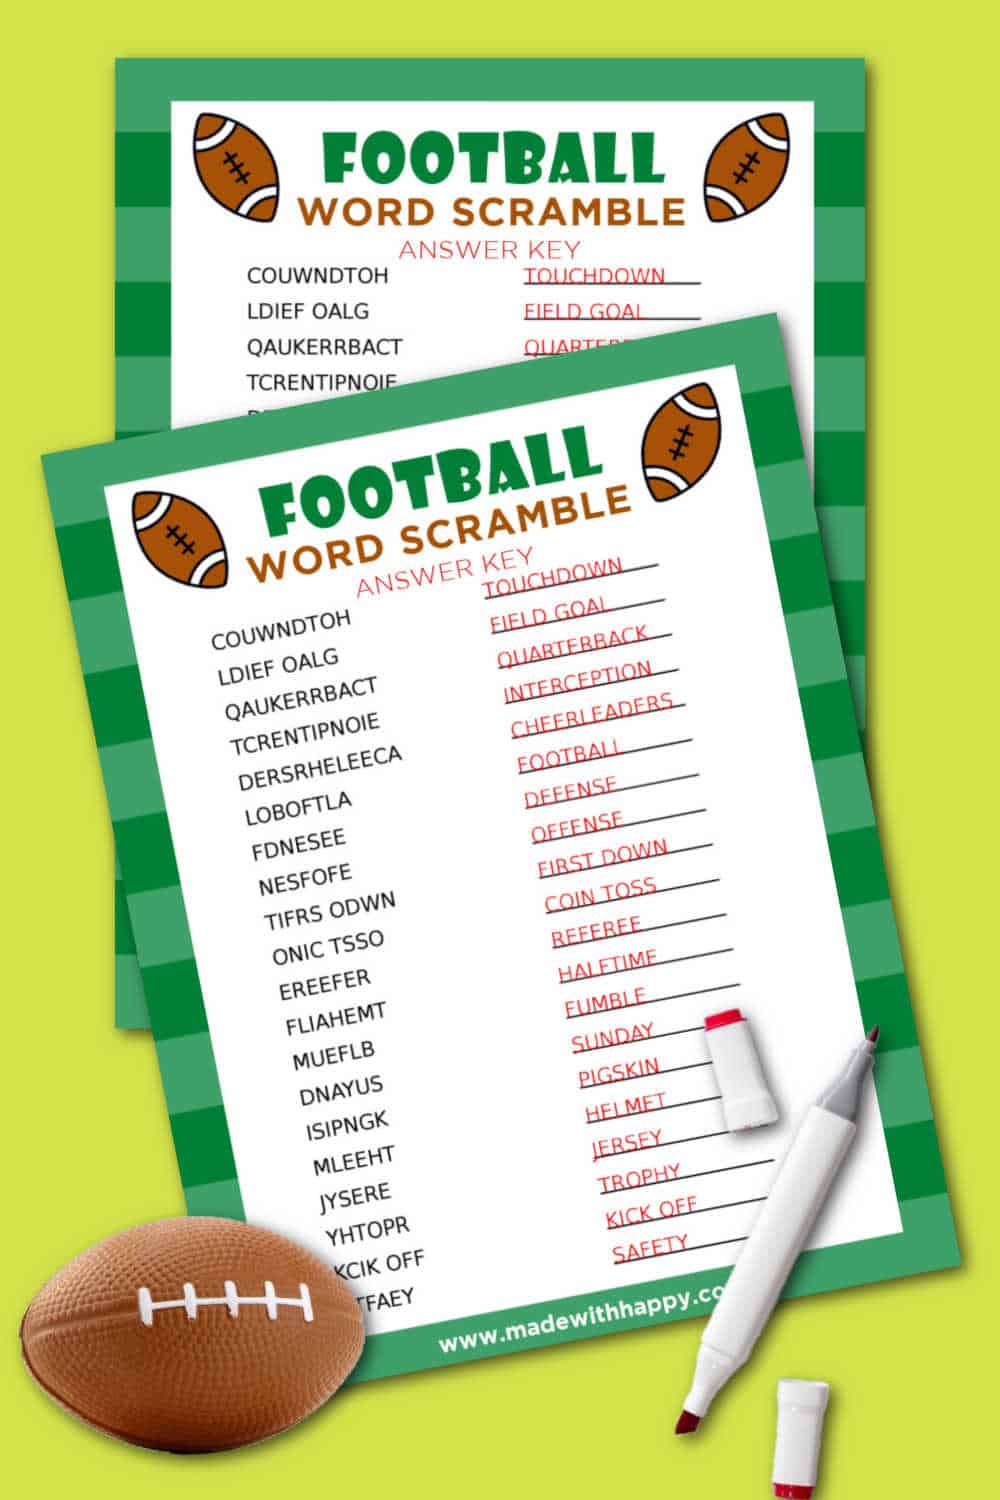 Football Word Scramble Answers